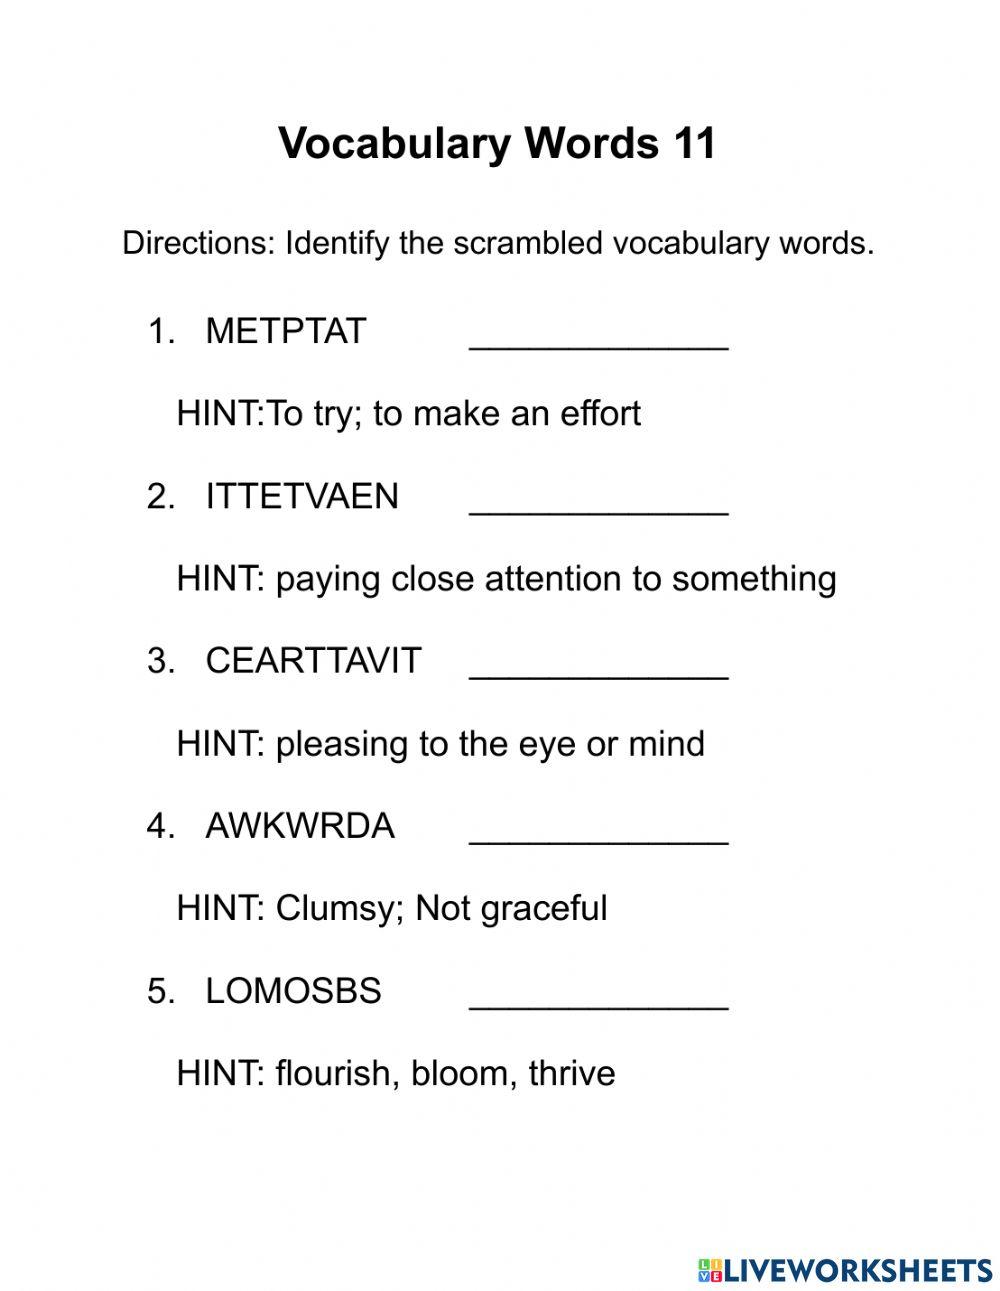 Vocabulary Word 11